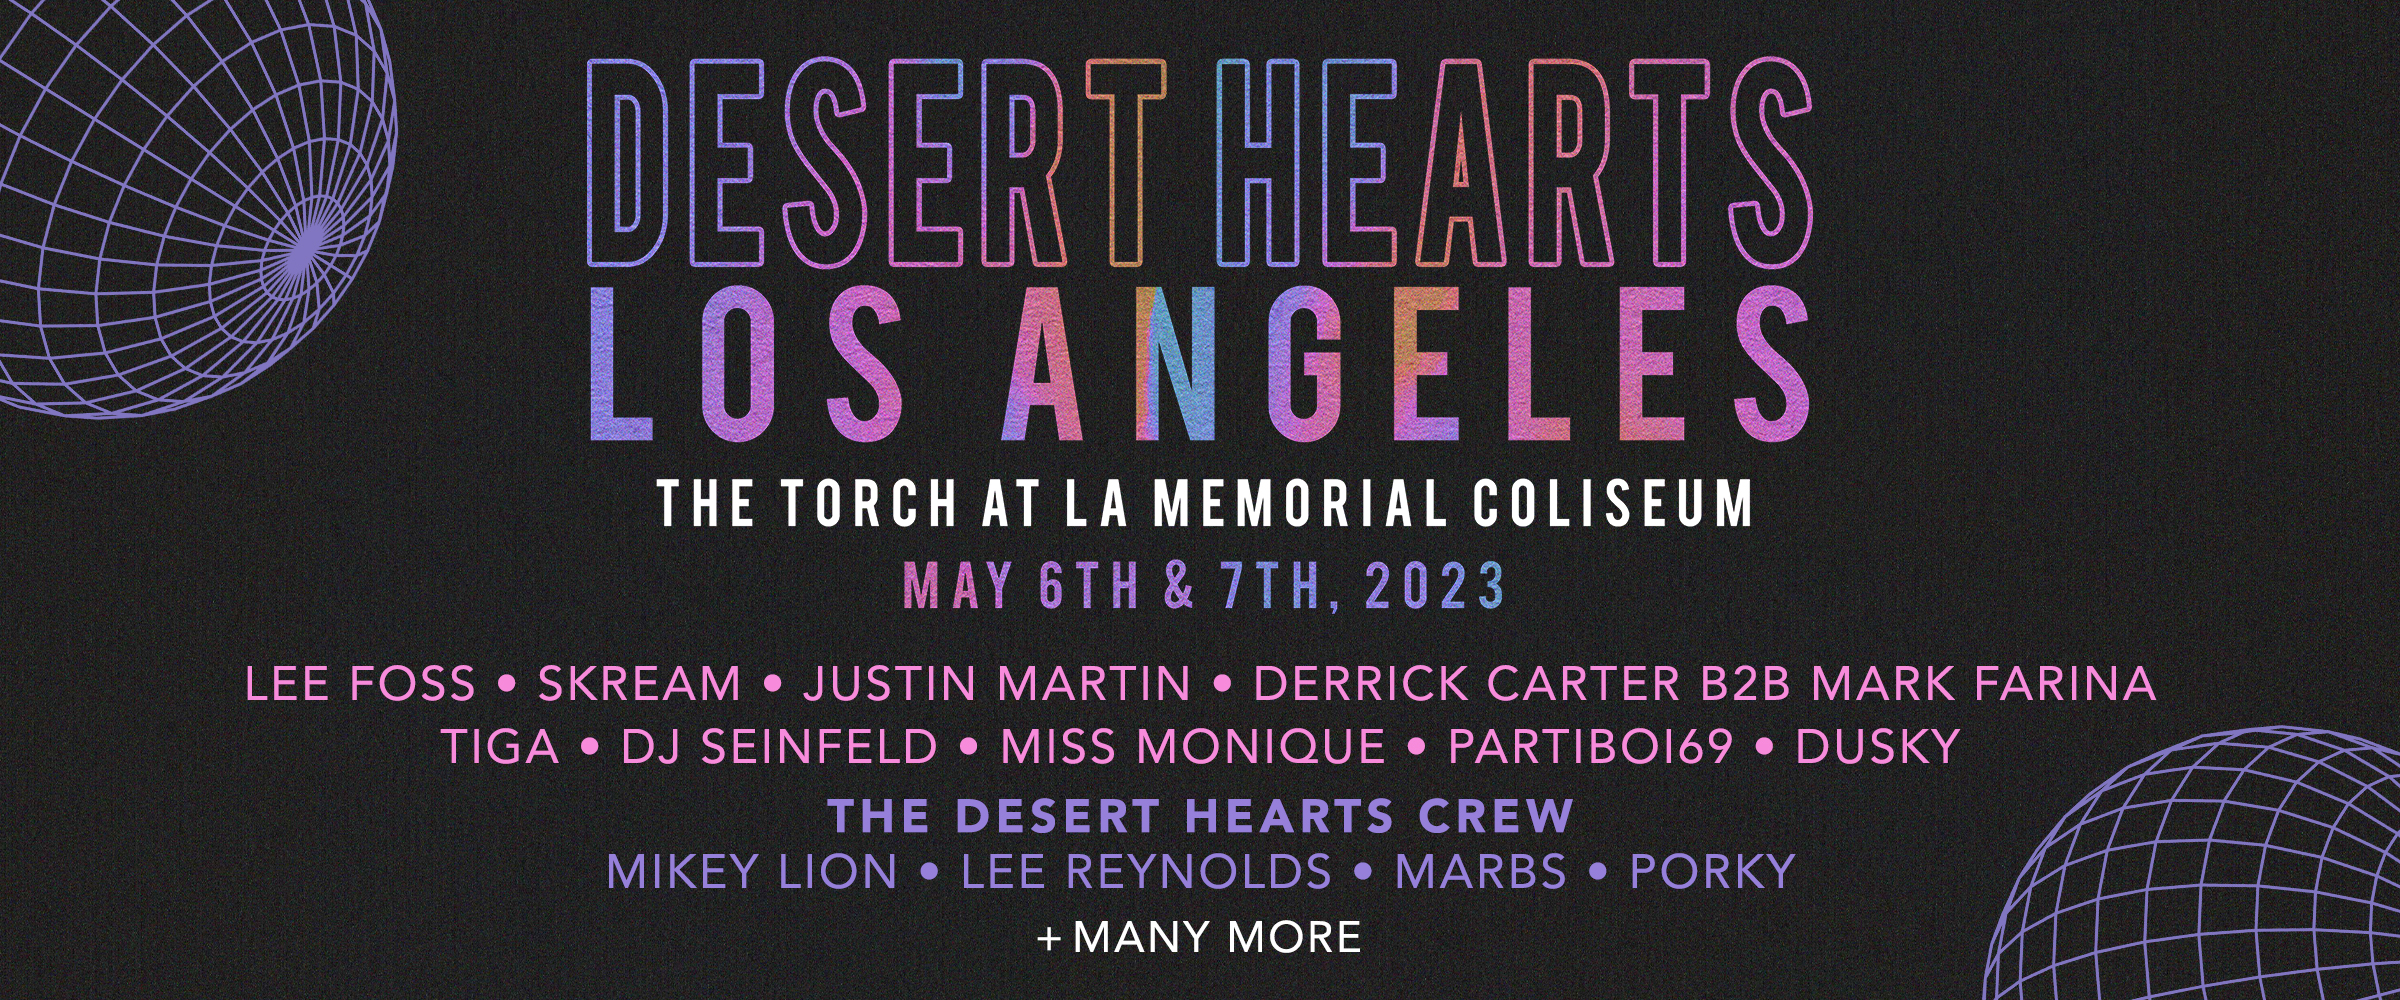 Desert Hearts: Los Angeles